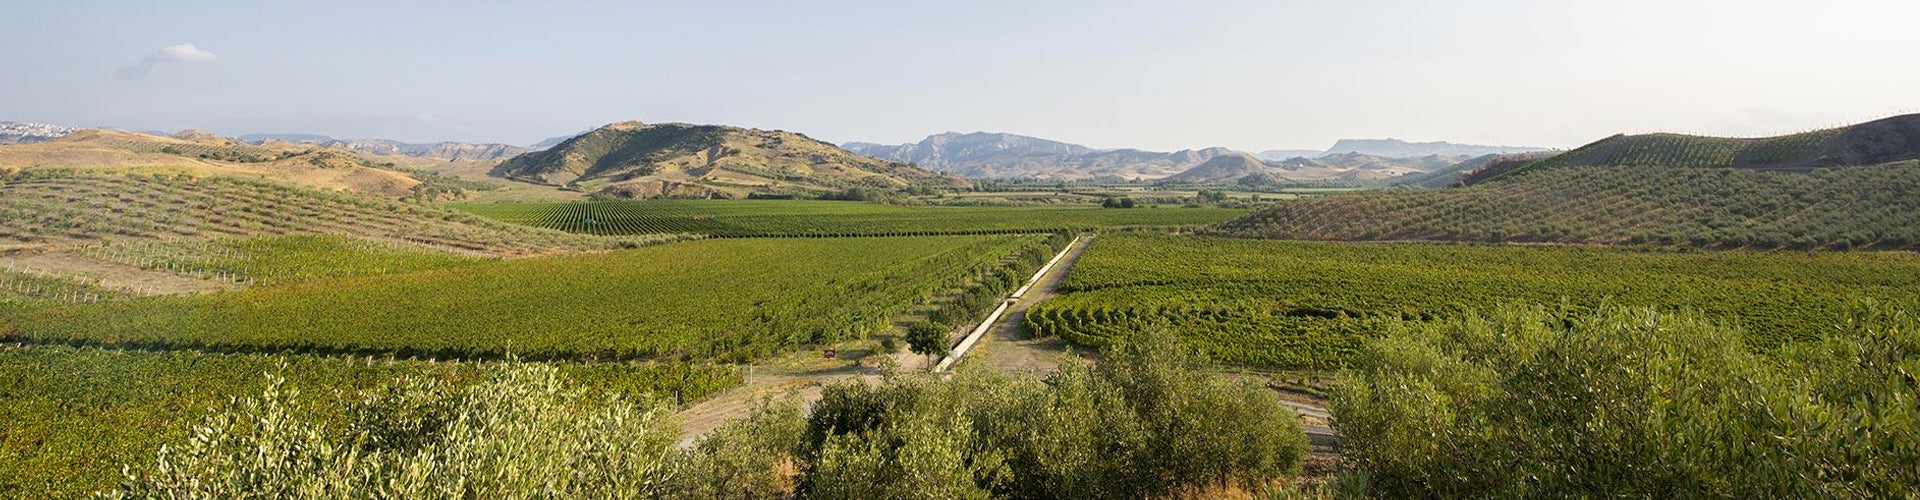 Librandi Vineyards in Calabri, Southern Italy